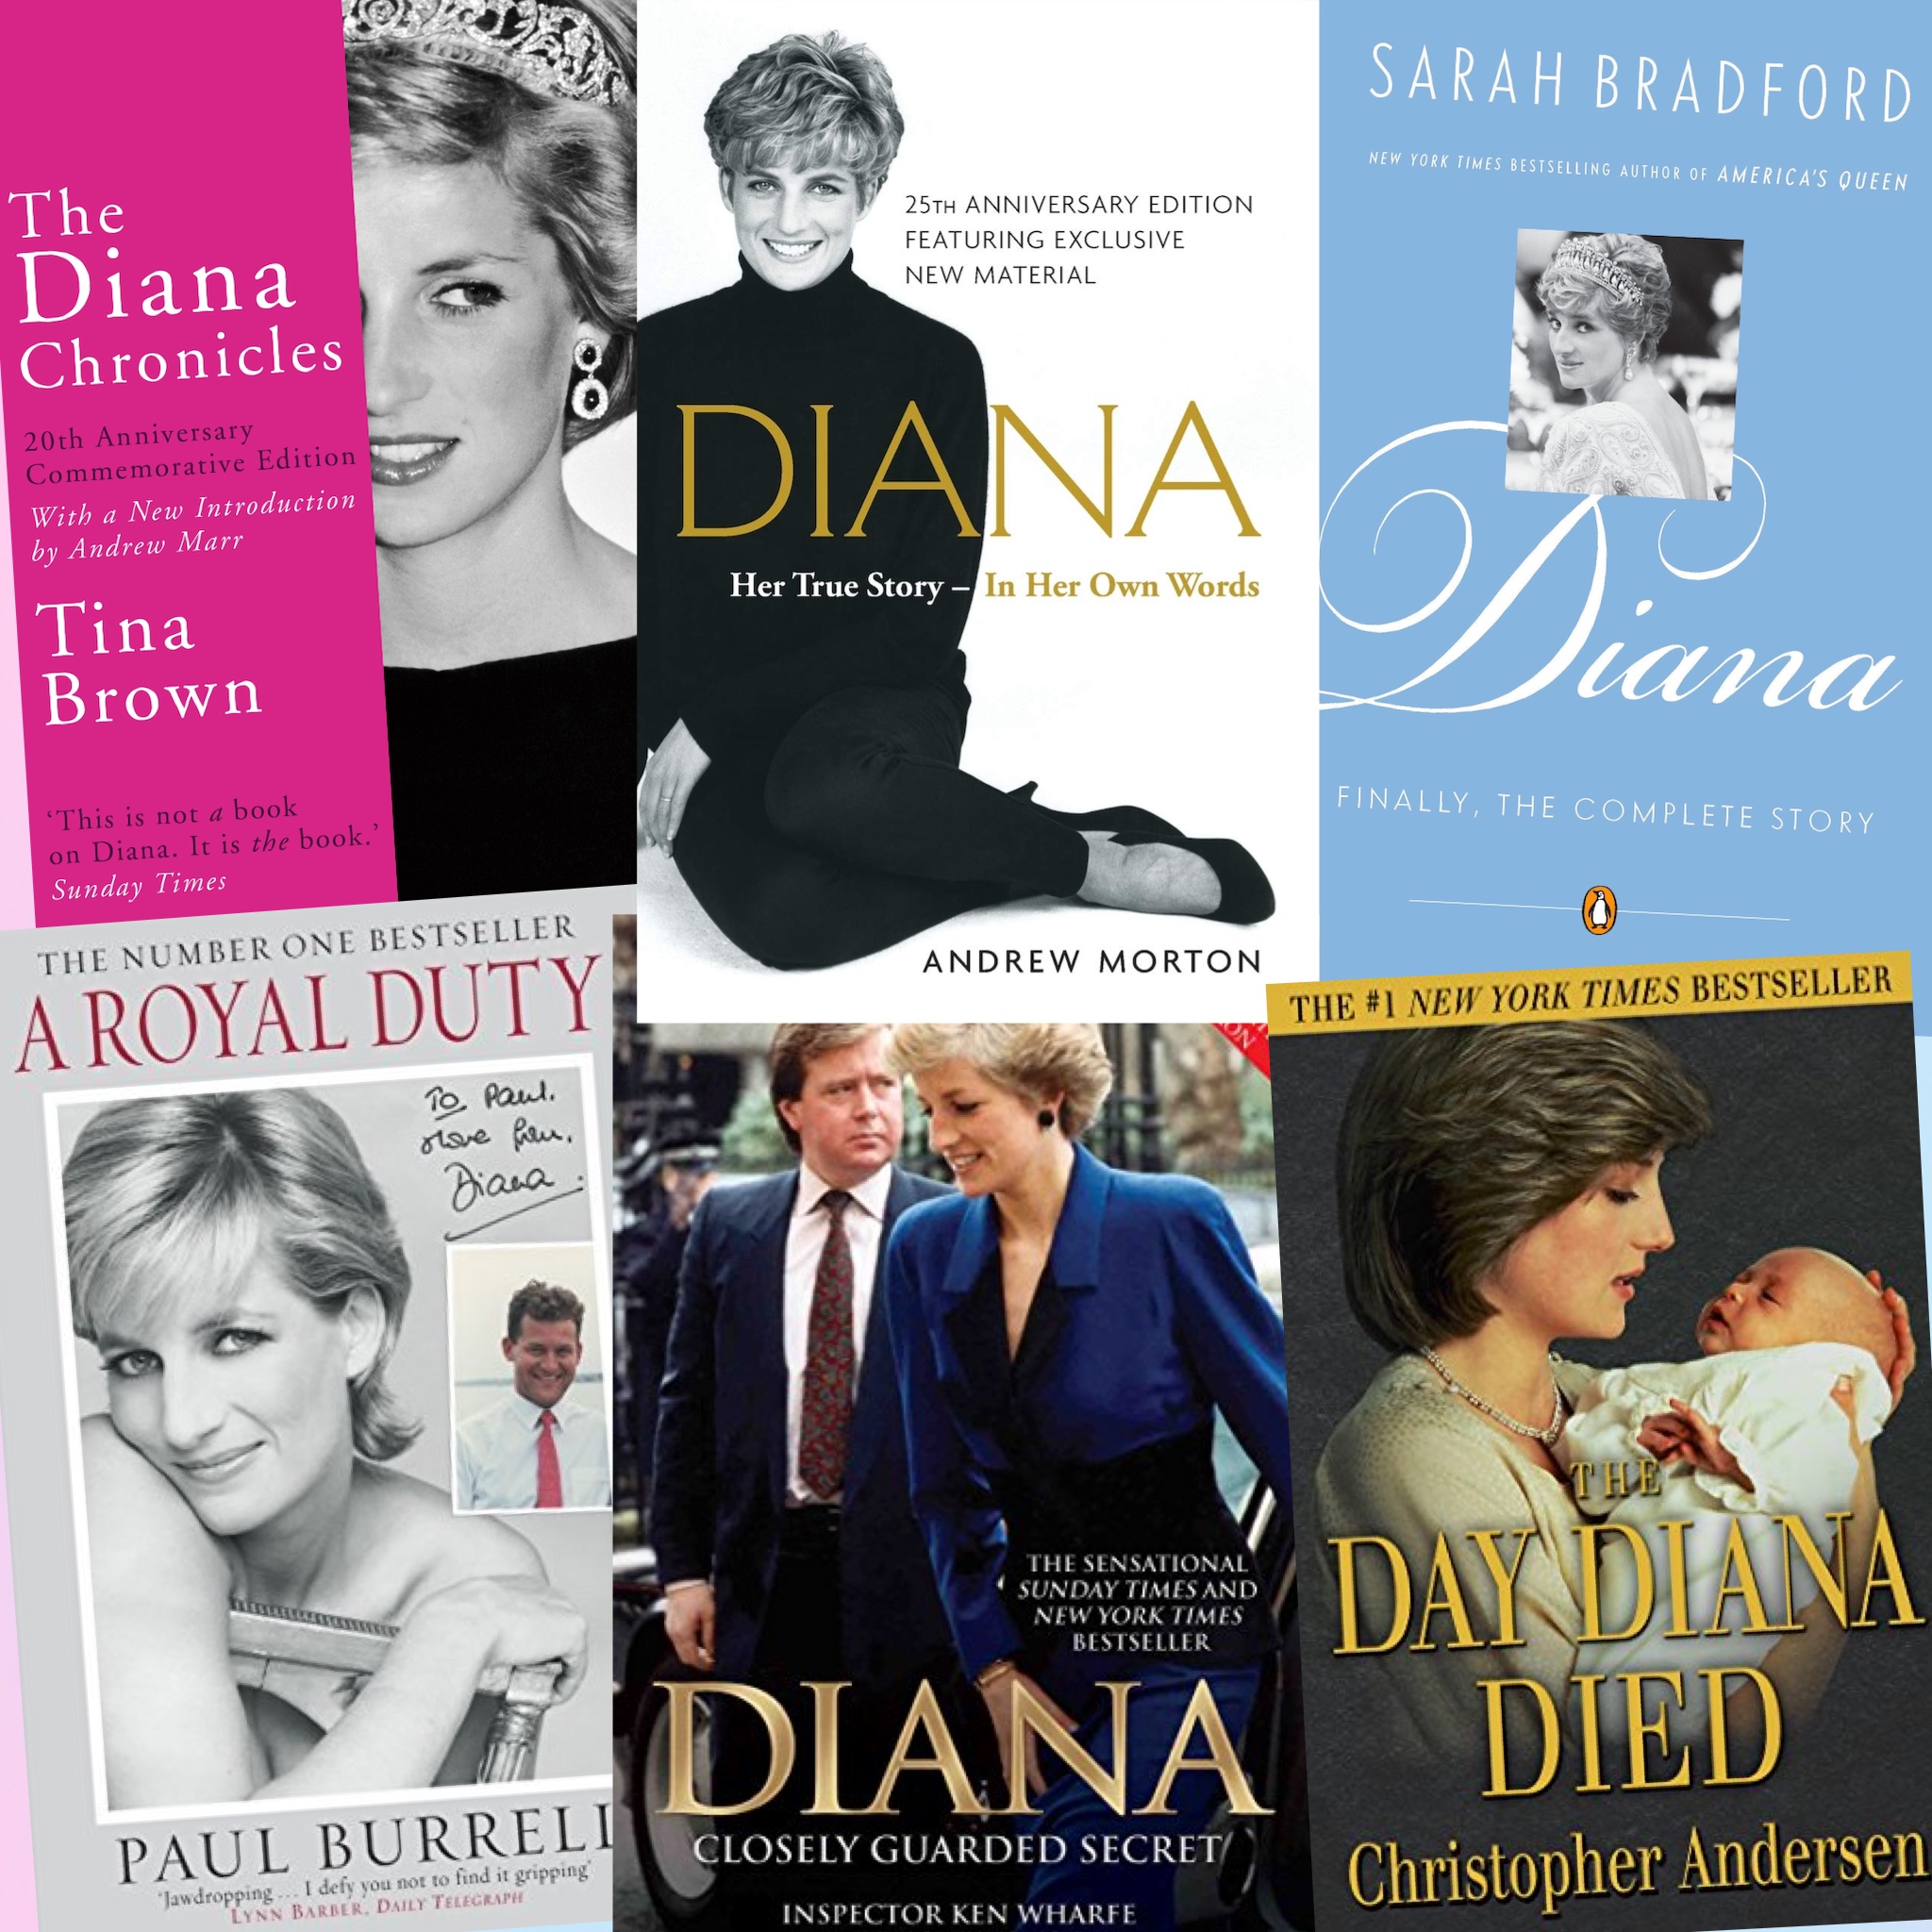 biography books about princess diana